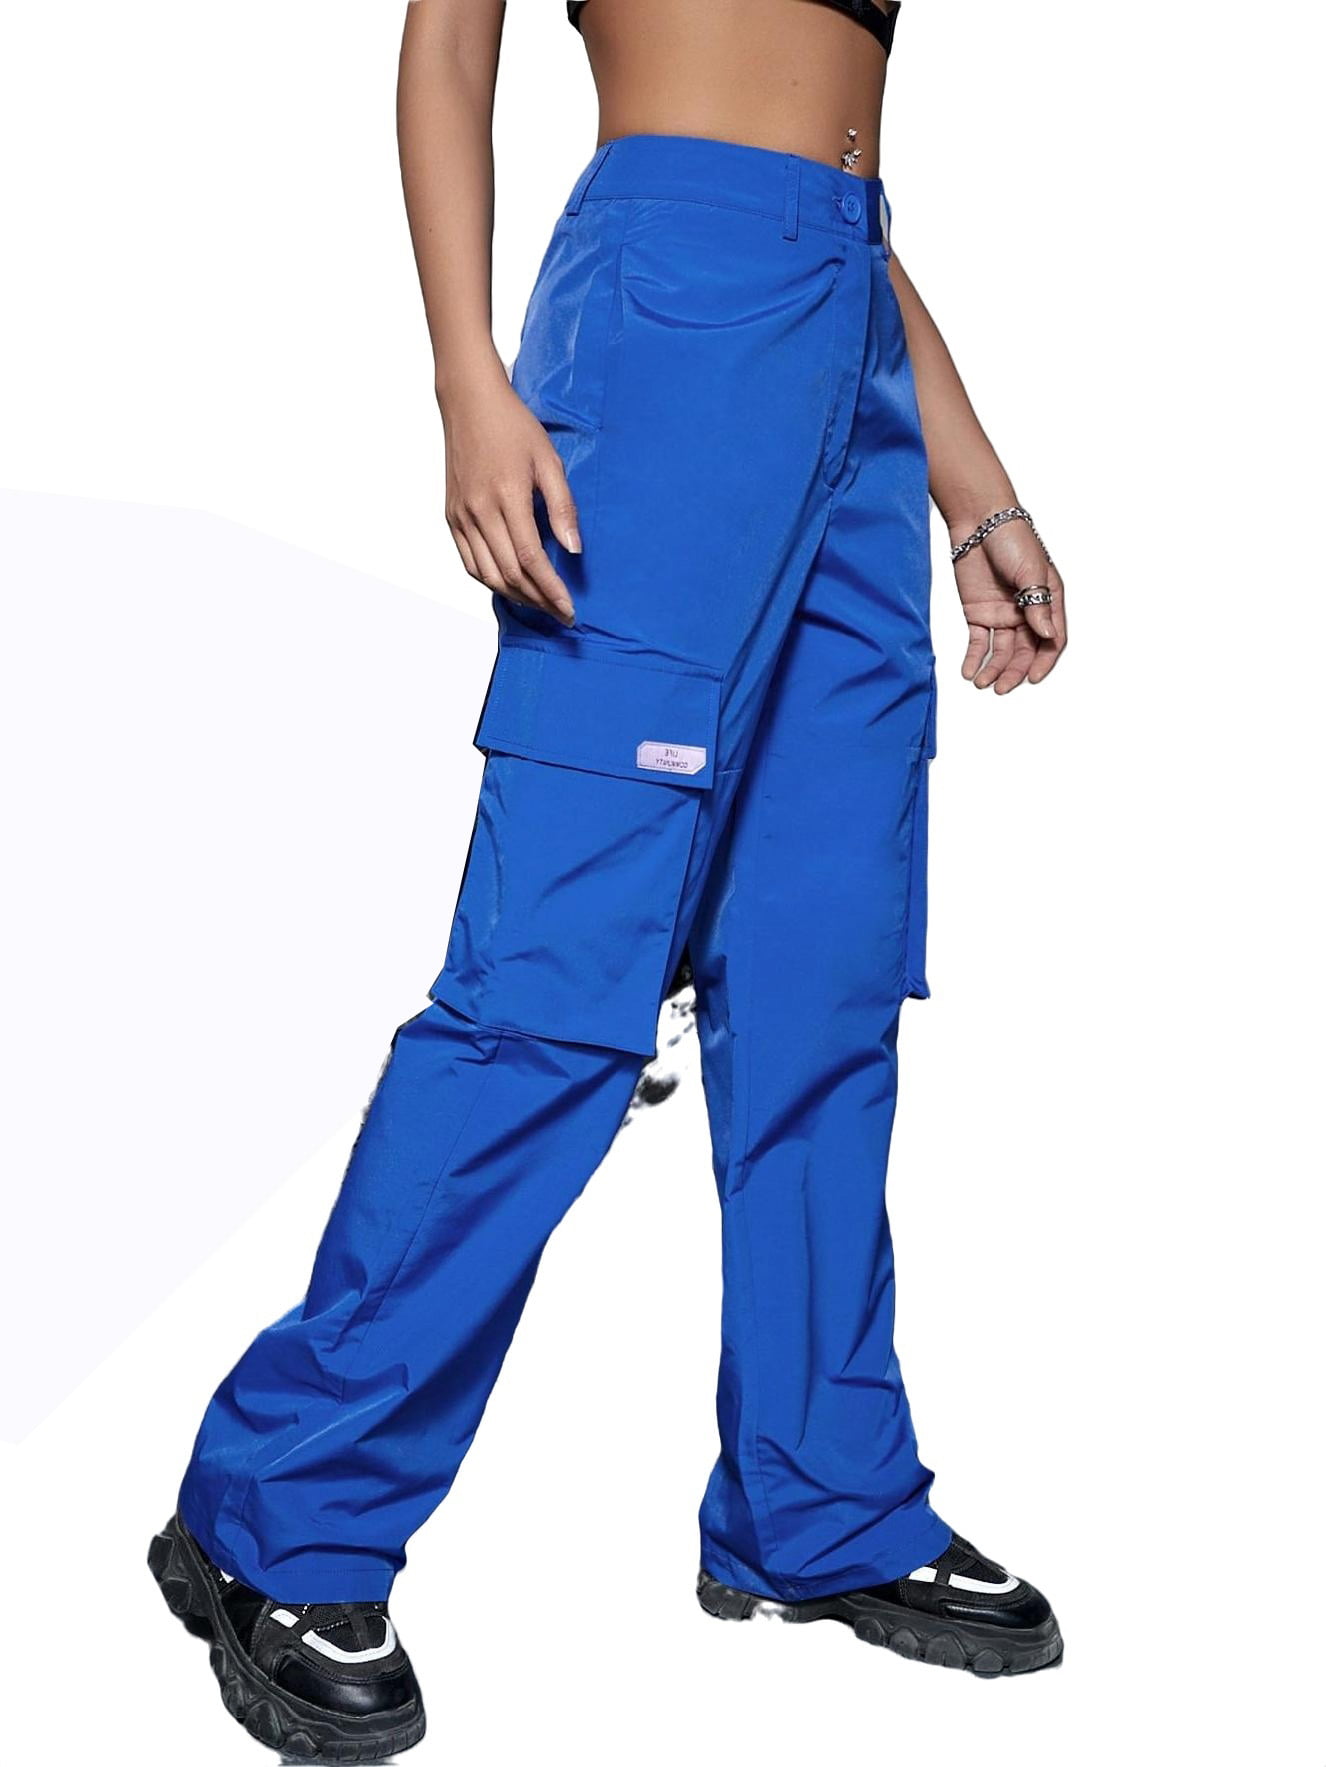 Women's Pants Solid High Waist Cargo Pants Royal Blue L